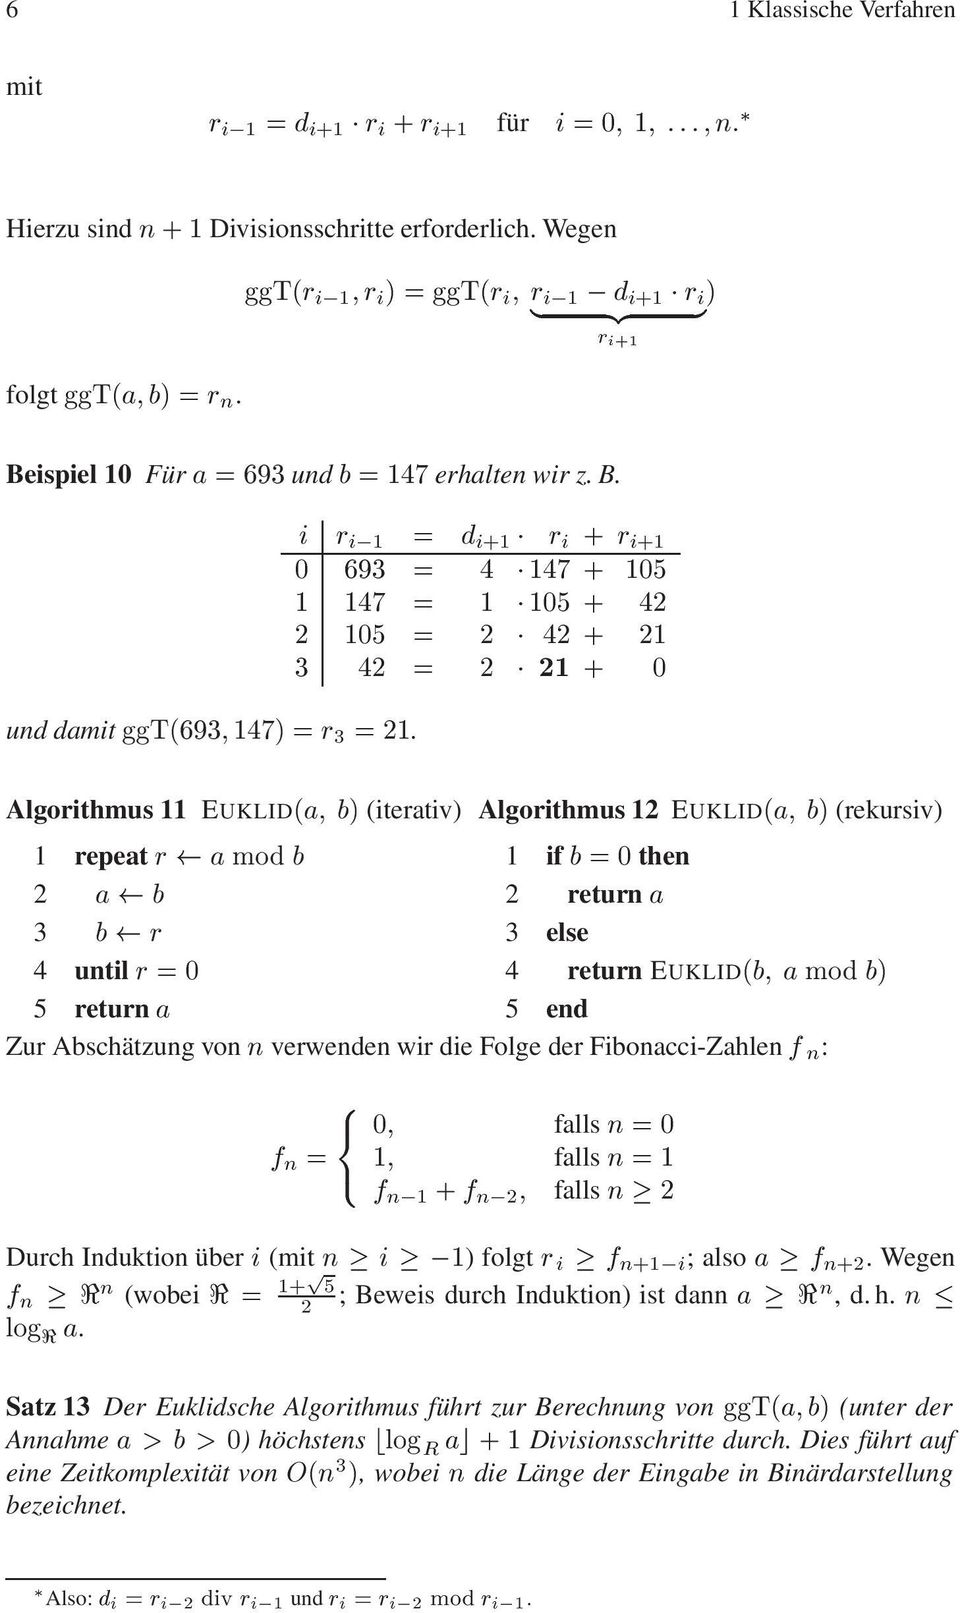 µ 5 return 5 end Zur Abschätzung von Ò verwenden wir die Folge der Fibonacci-Zahlen Ò : Ò ¼ ½ Ò ½ Ò ¾ falls Ò ¼ falls Ò ½ falls Ò ¾ Durch Induktion über (mit Ò ½) folgt Ö Ò ½ ; also Ò ¾.